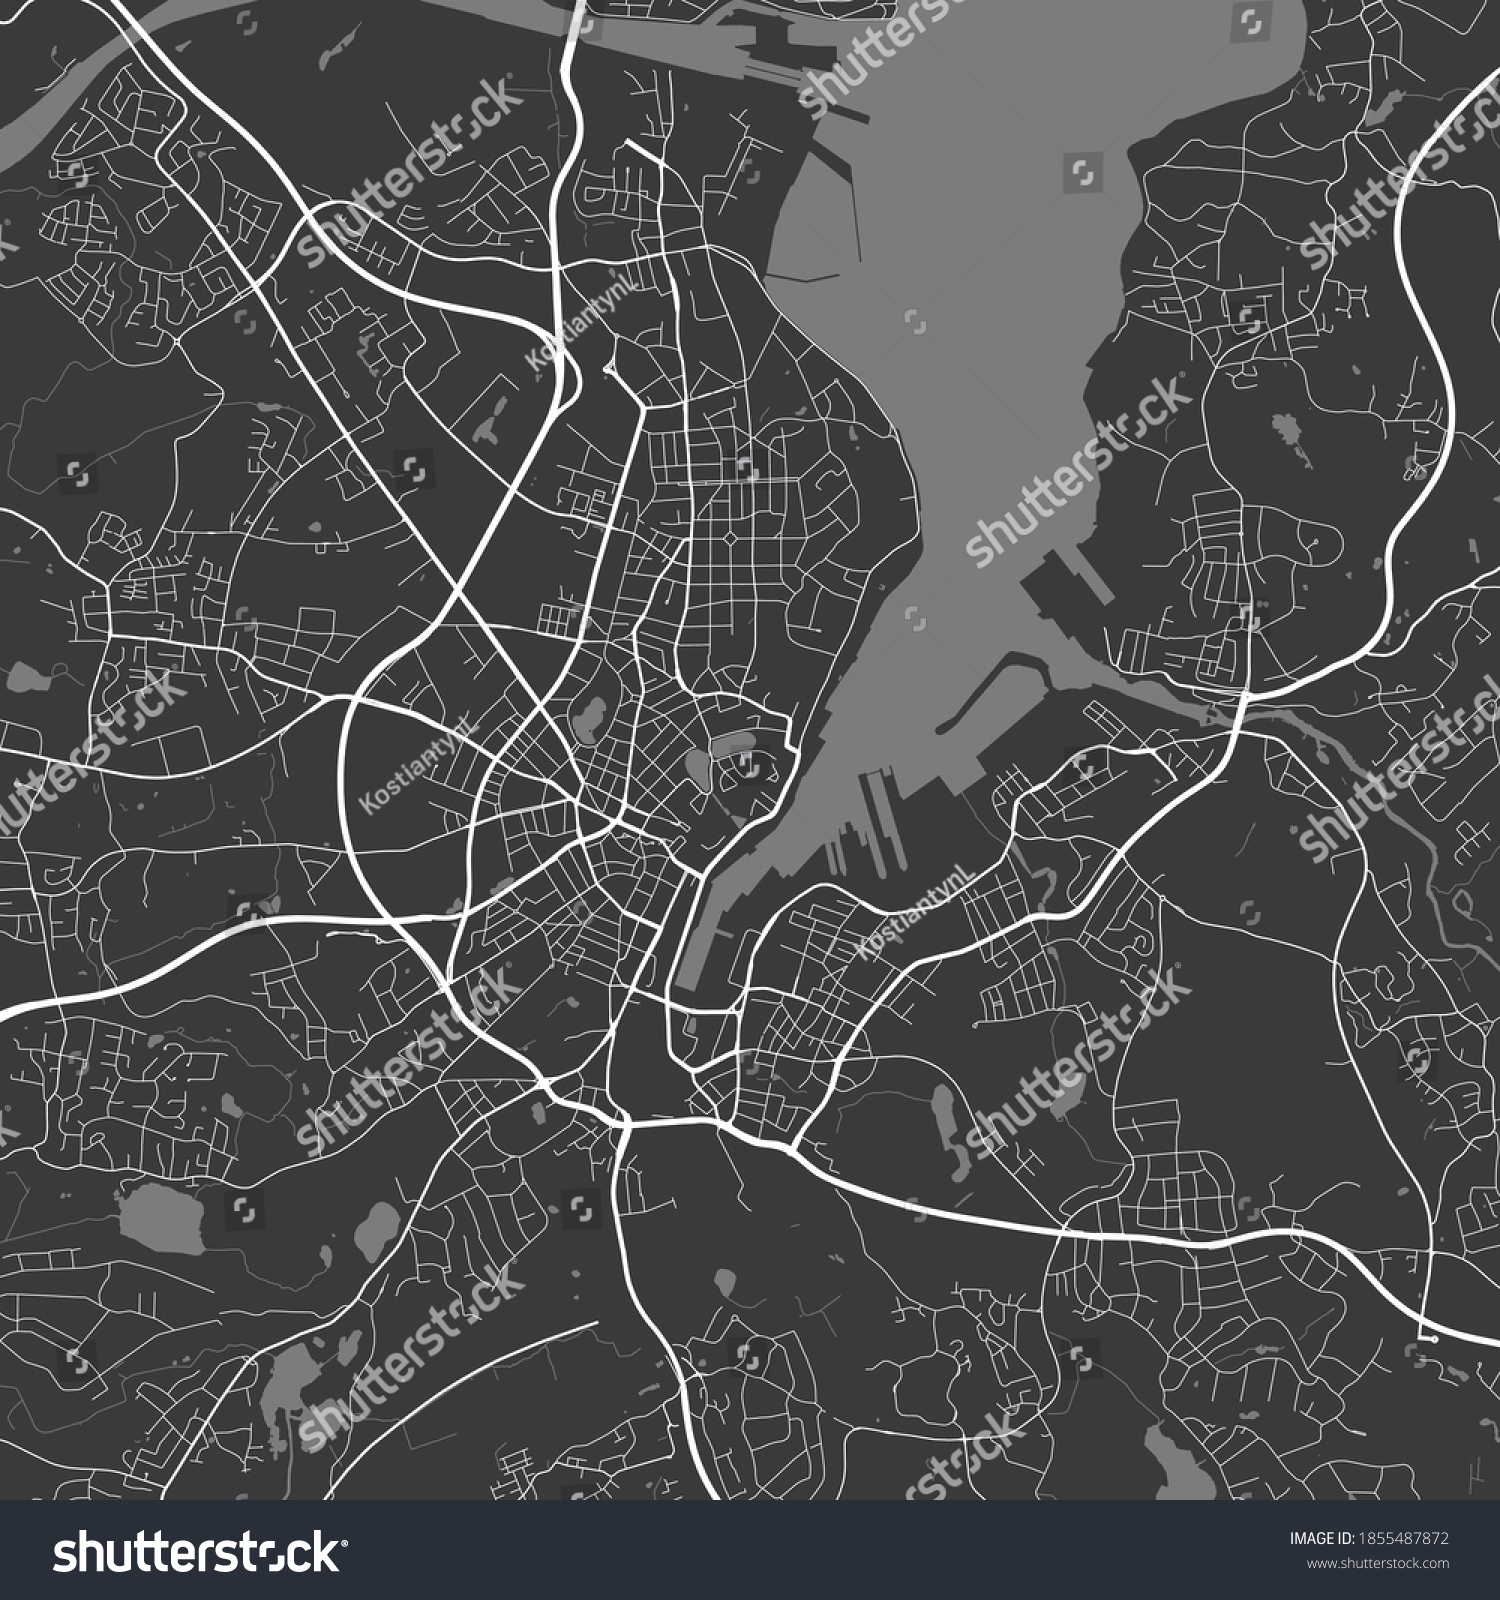 SVG of Urban city map of Kiel. Vector illustration, Kiel map art poster. Street map image with roads, metropolitan city area view. svg